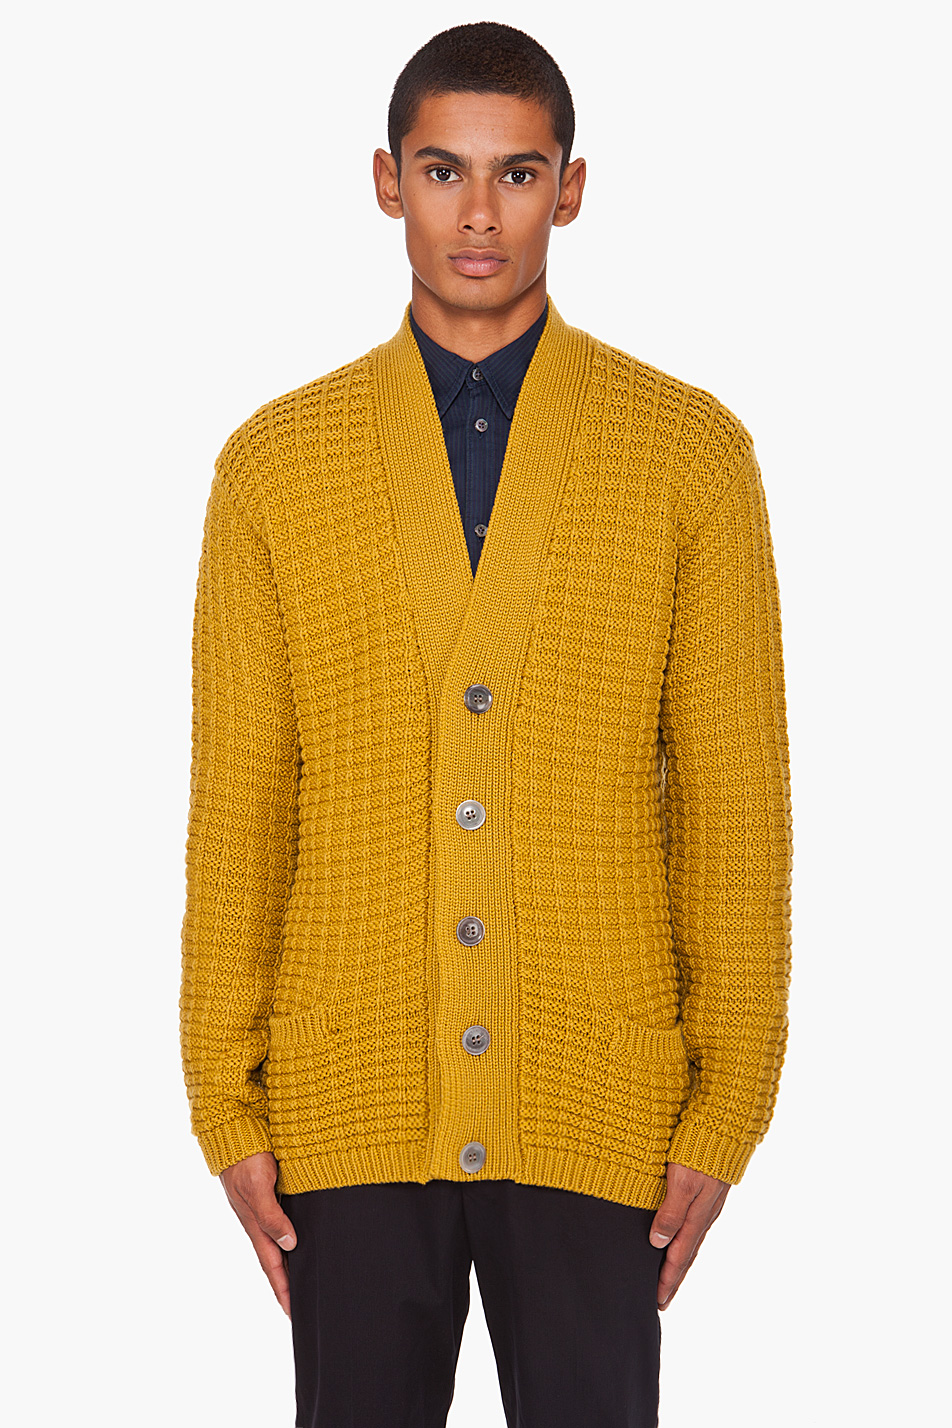 Lyst - Paul Smith Waffle Knit Merino Wool Cardigan in Yellow for Men